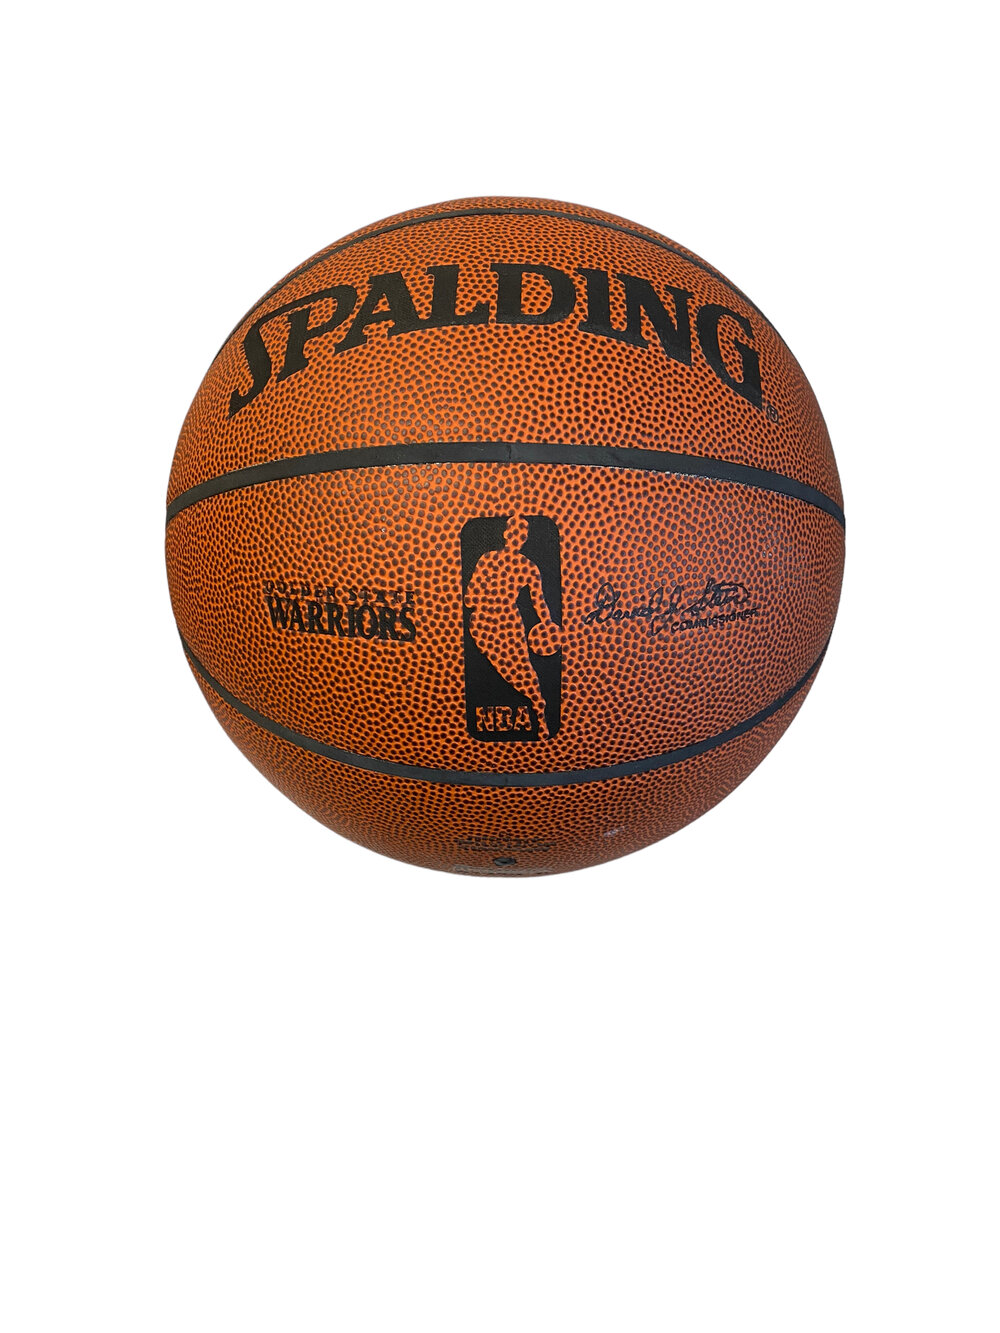 Kelenna Azubuike Signed Golden State Warriors Basketball — Mercer Island  Thrift Shop